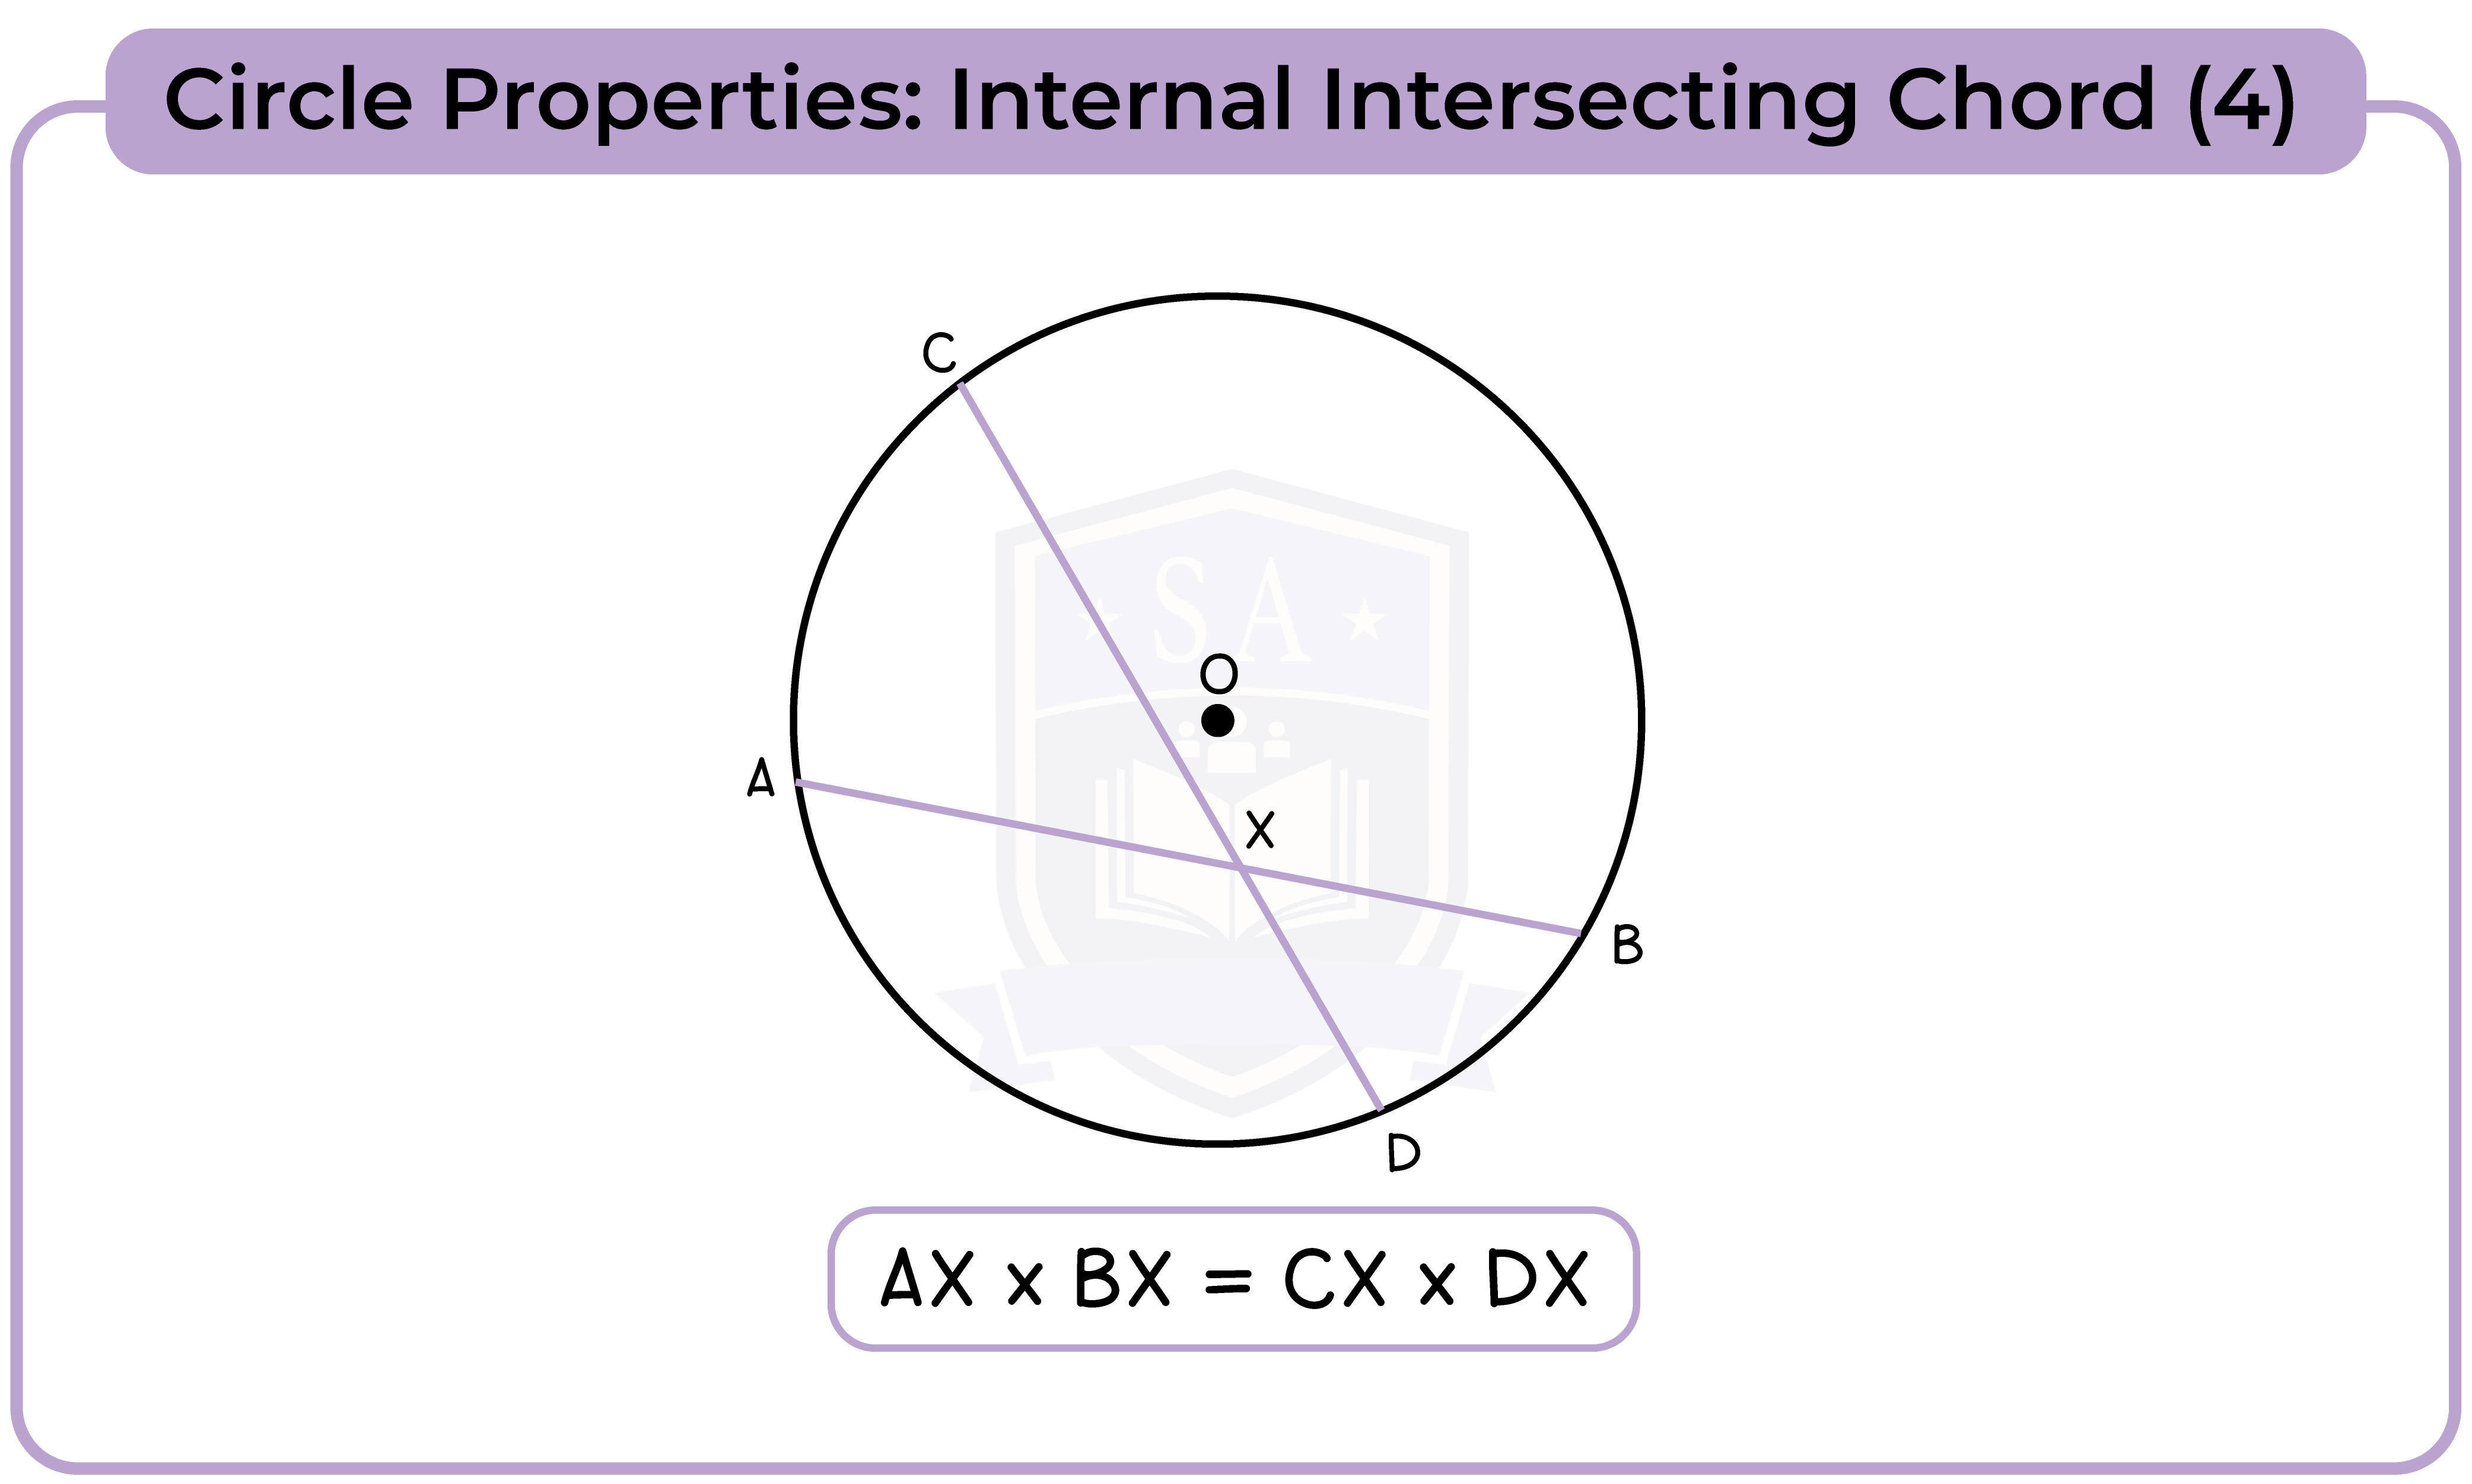 edexcel_igcse_mathematics a_topic 30_circle properties_005_Circle Properties: Internal Intersecting Chord (4)